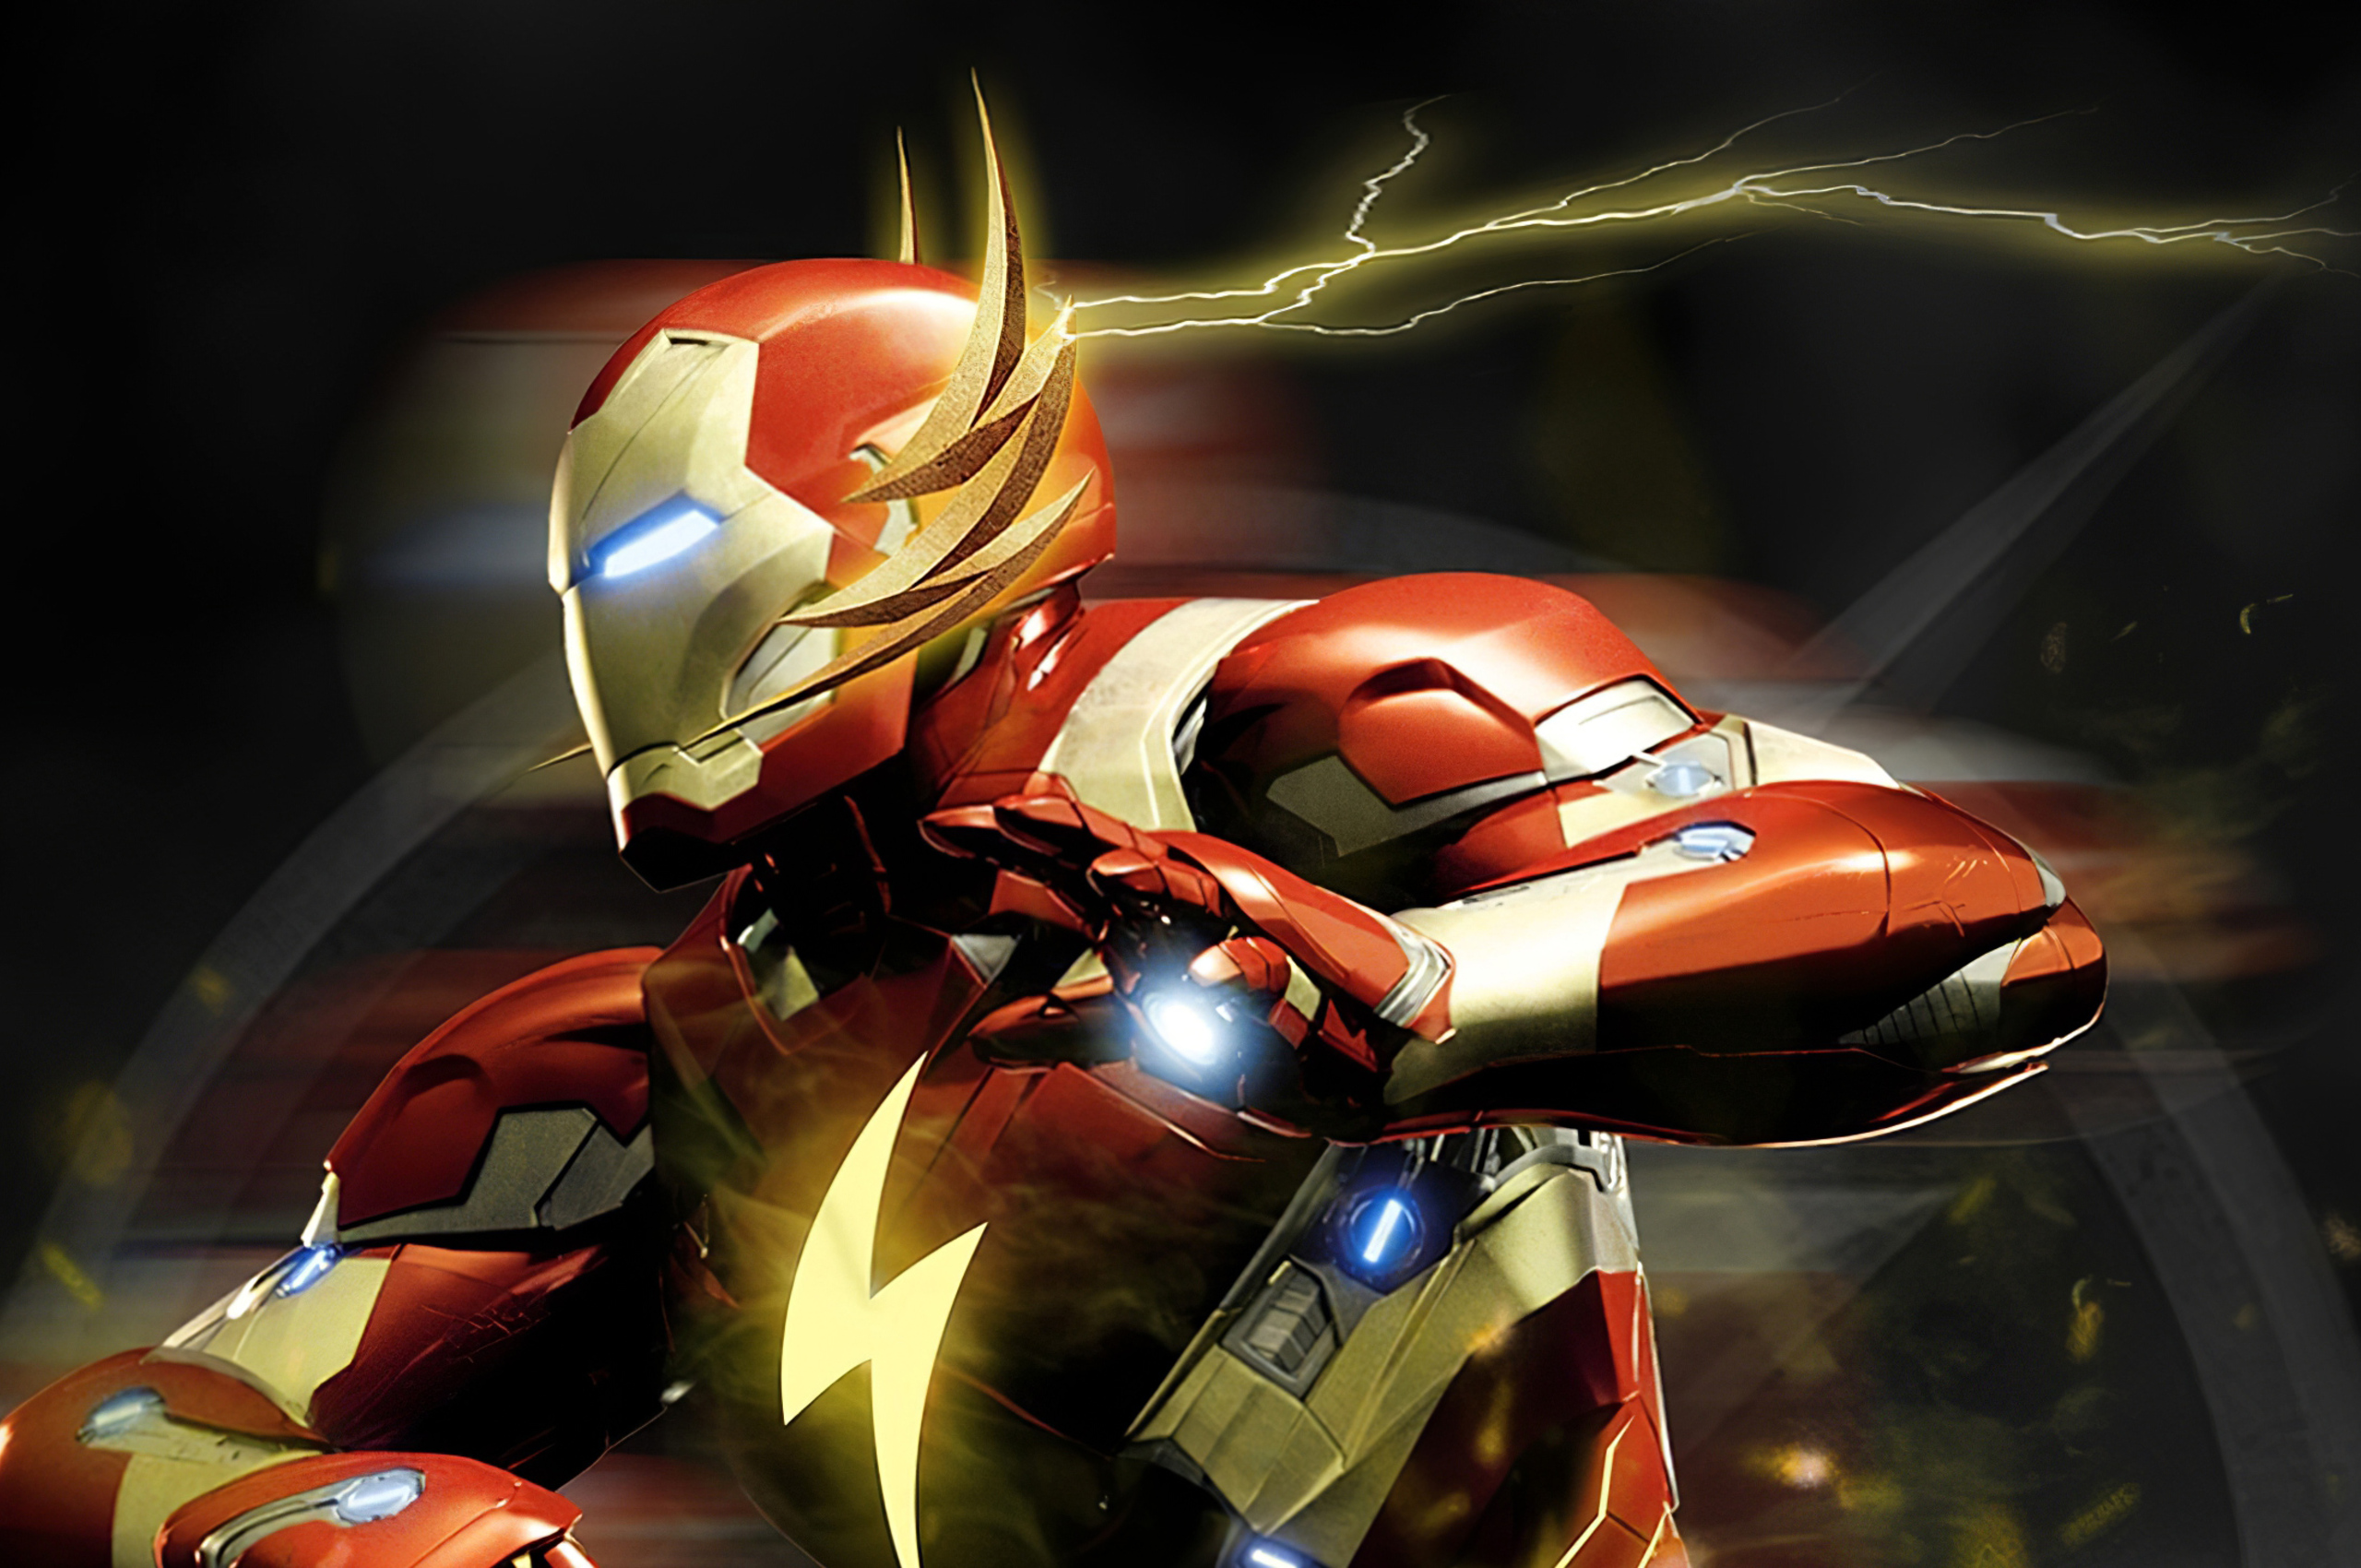 Iron Man As Flash In 2560x1700 Resolution. iron-man-as-flash-0t.jpg. 